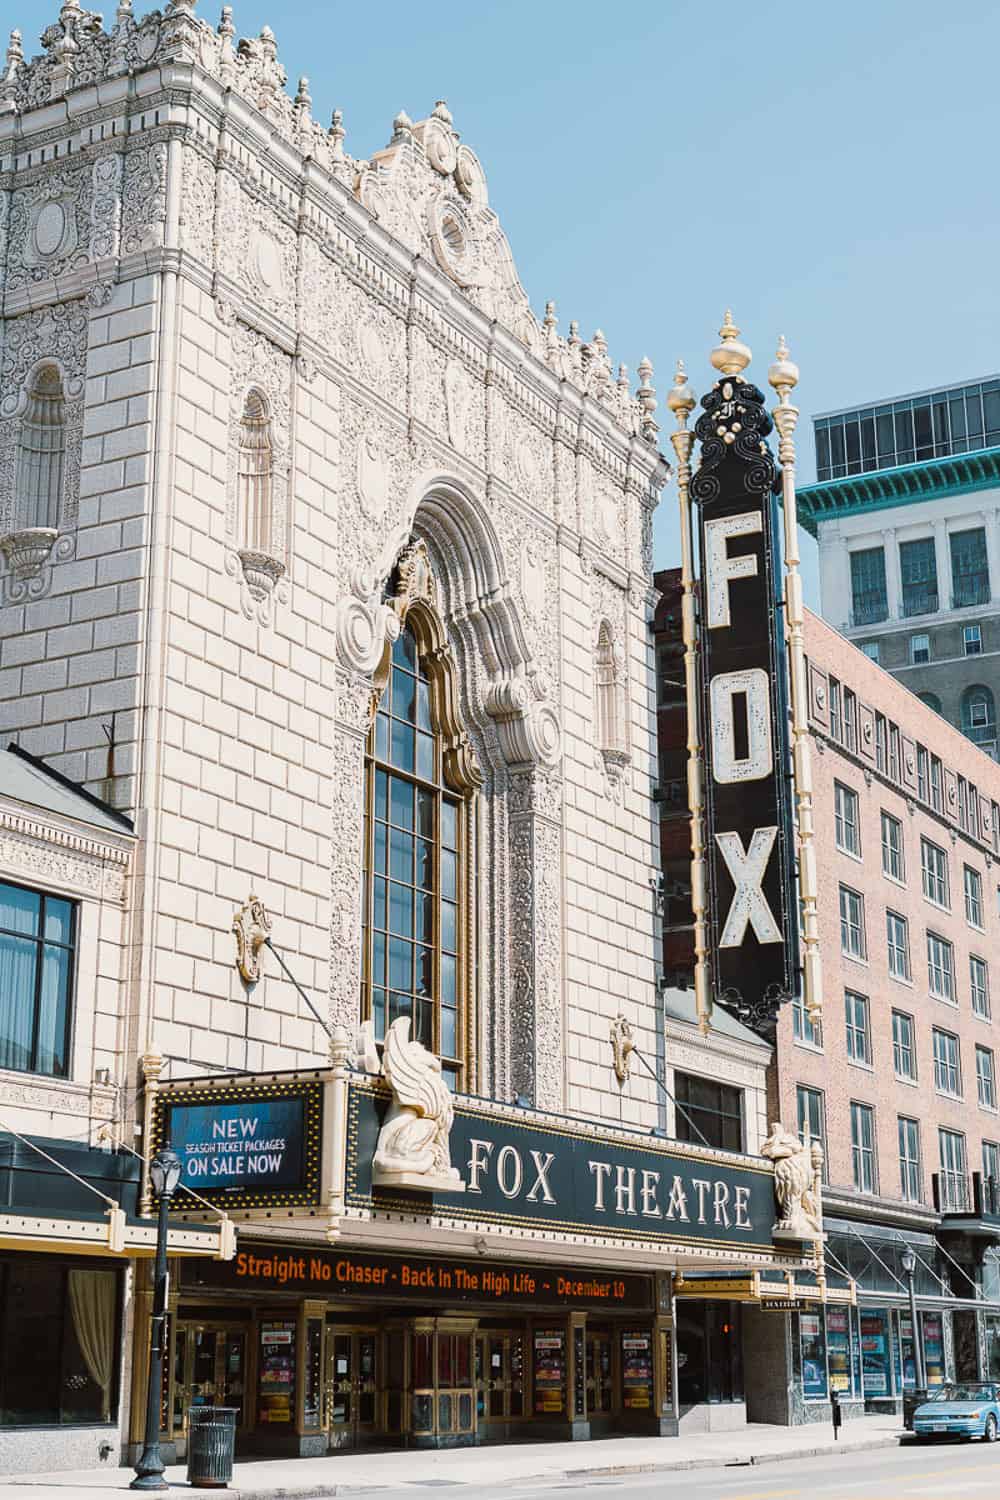 Fox Theatre Wedding Venue, Fox Theatre Saint Louis MO, St. Louis Wedding Photographer, Theresa Kelly Photography